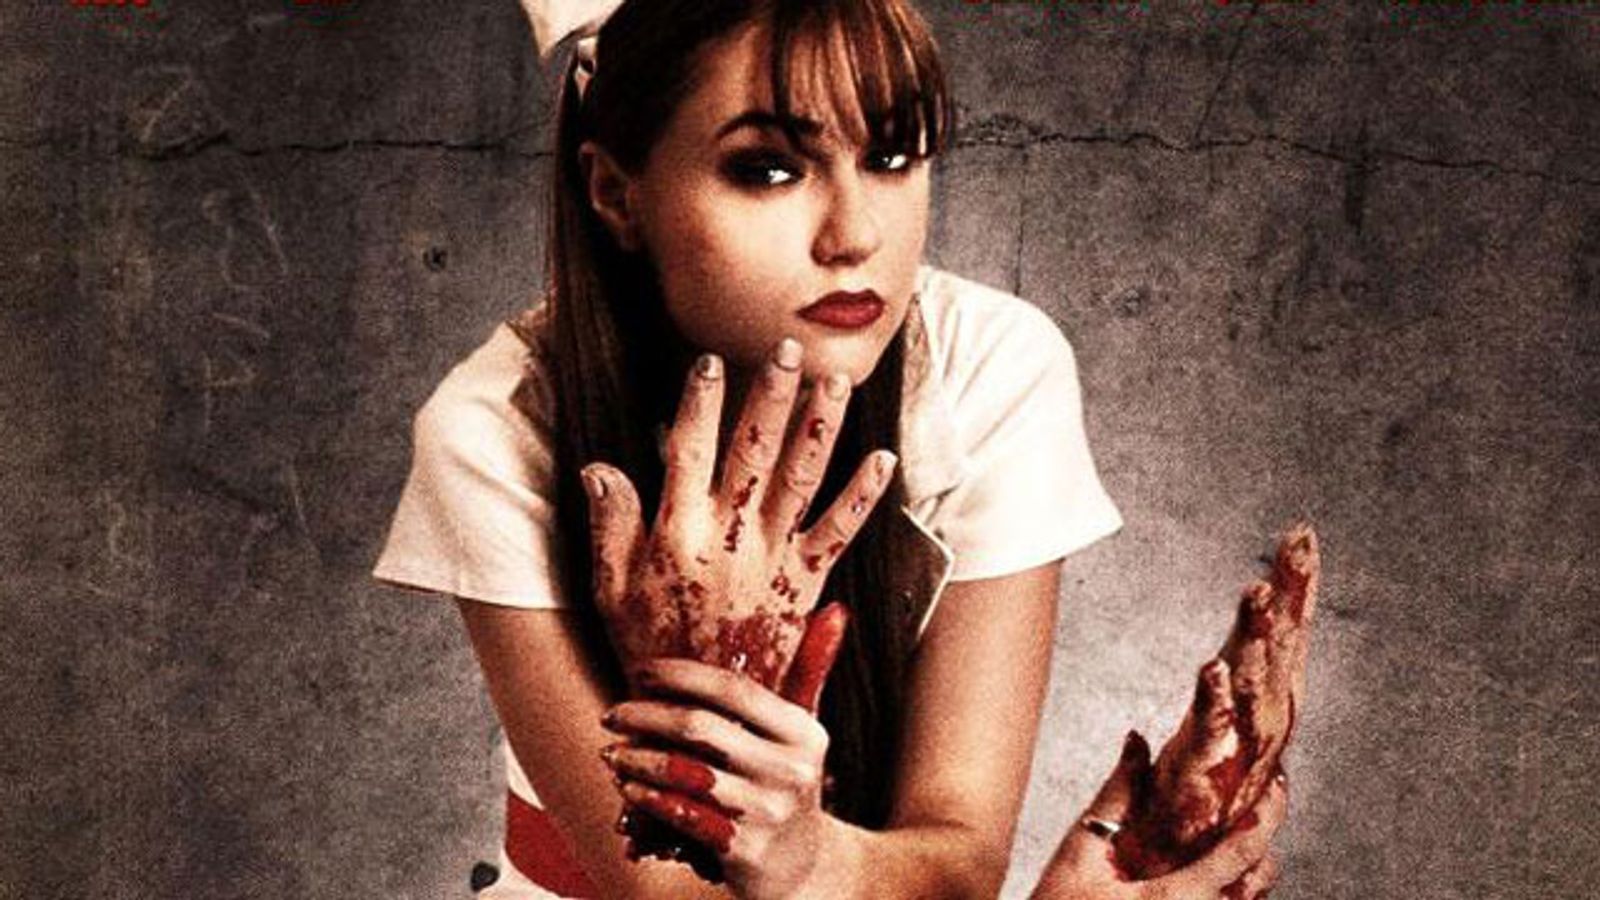 Sasha Grey Horror Film 'Smash Cut' Gets Lone L.A. Screening Tonight